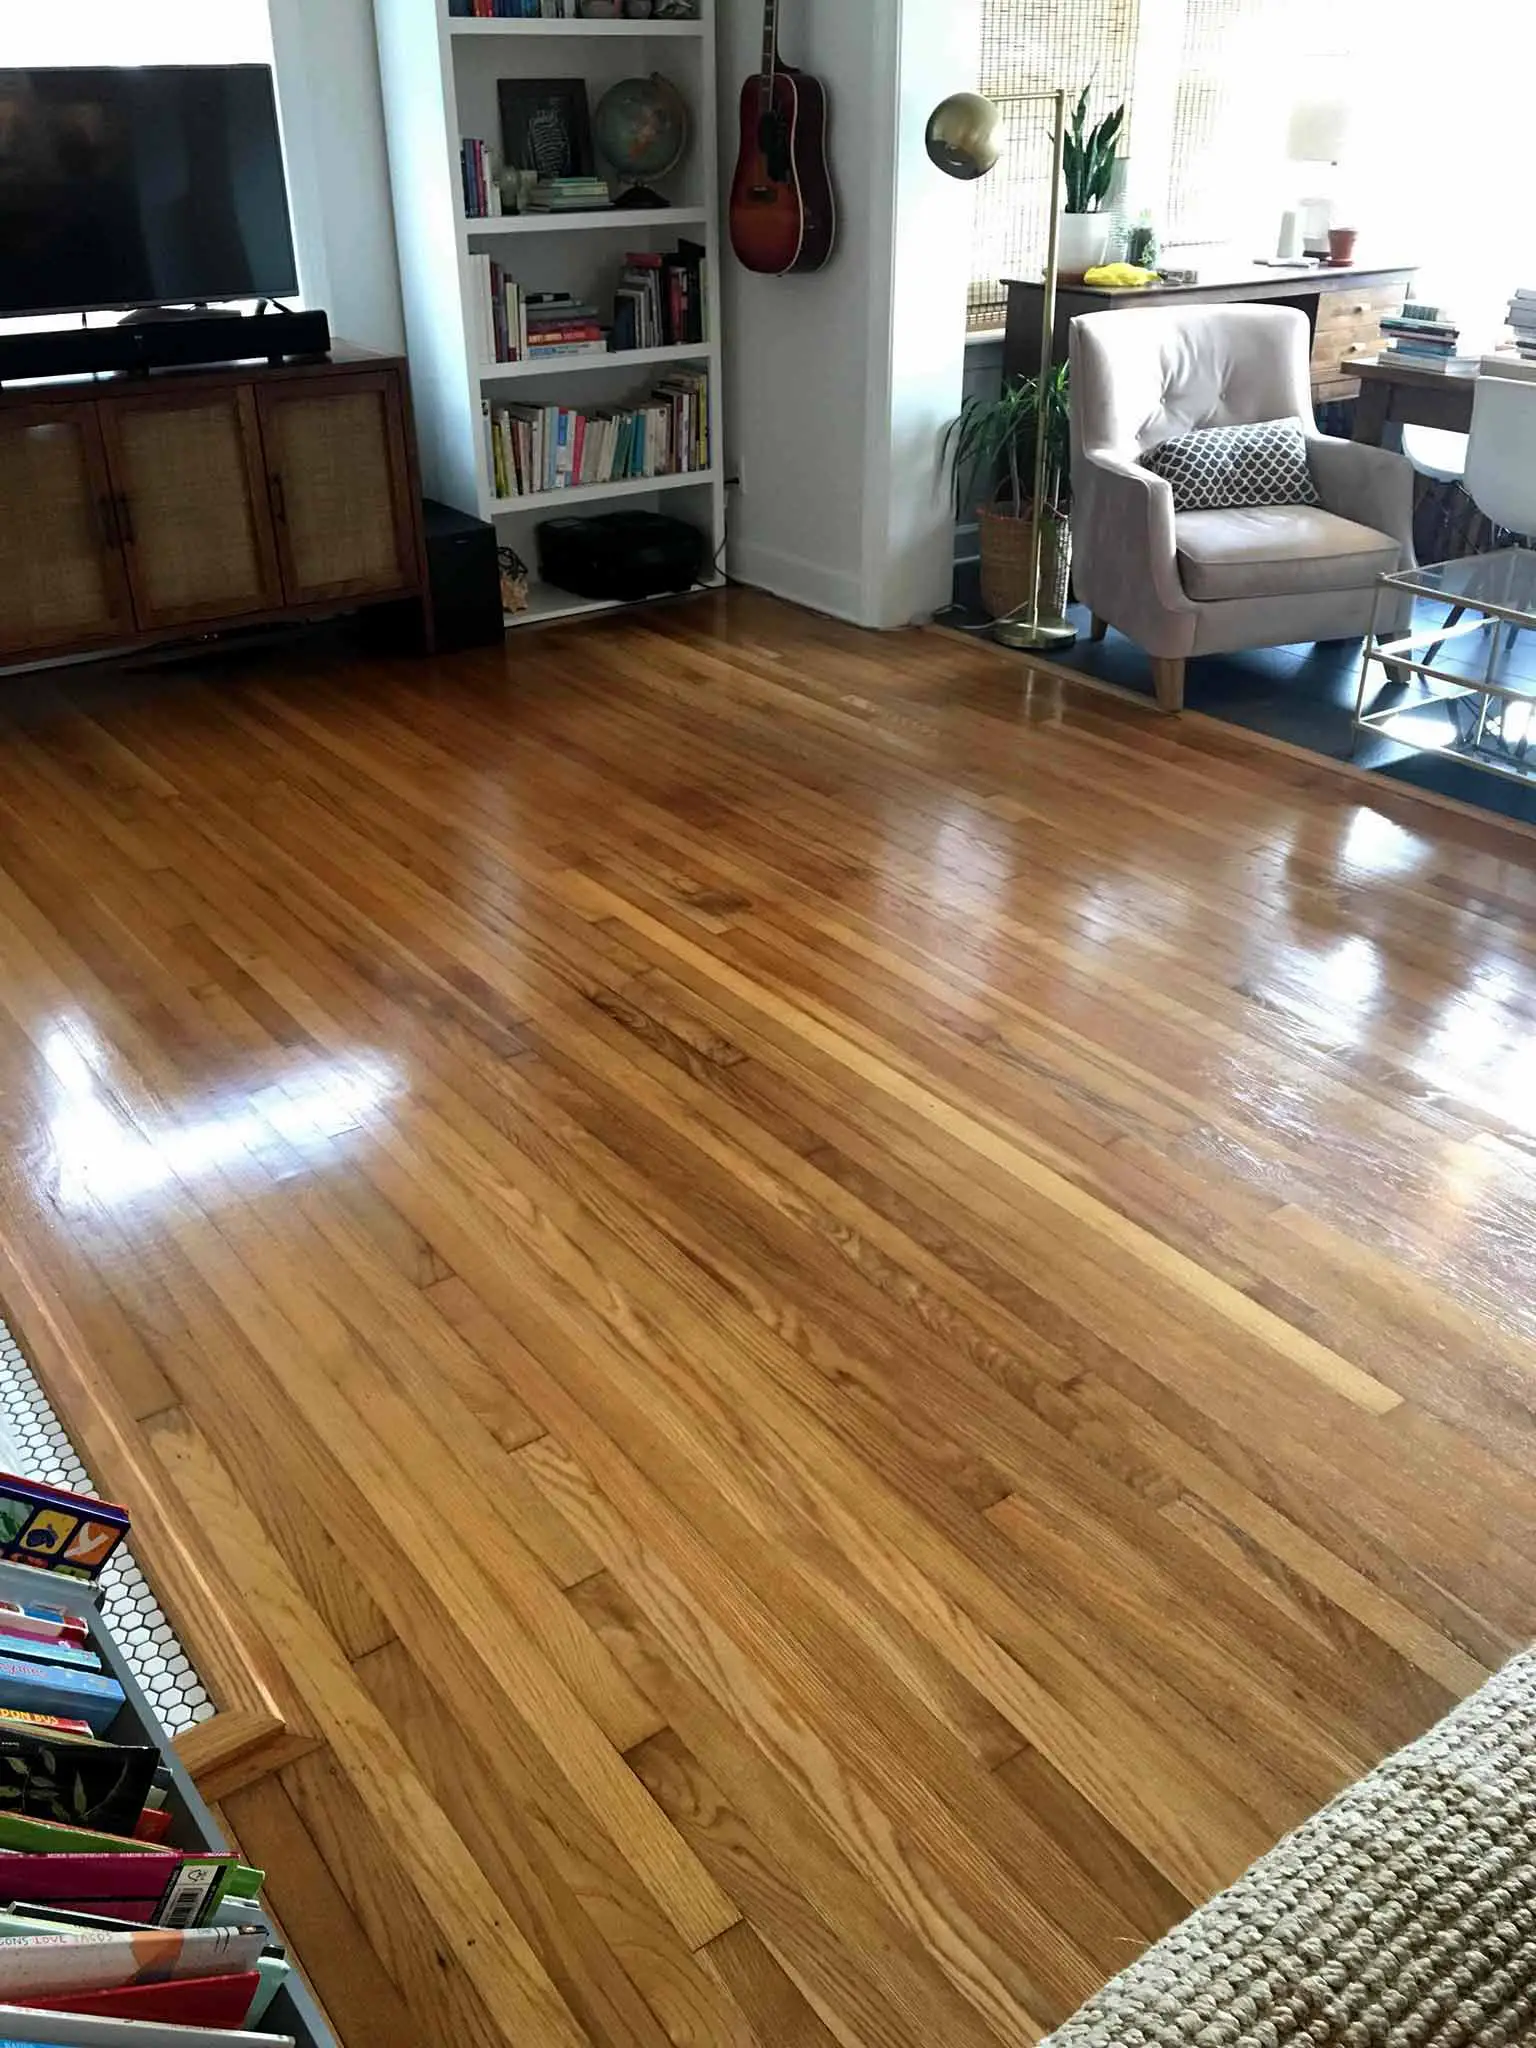 shiny hardwood floors